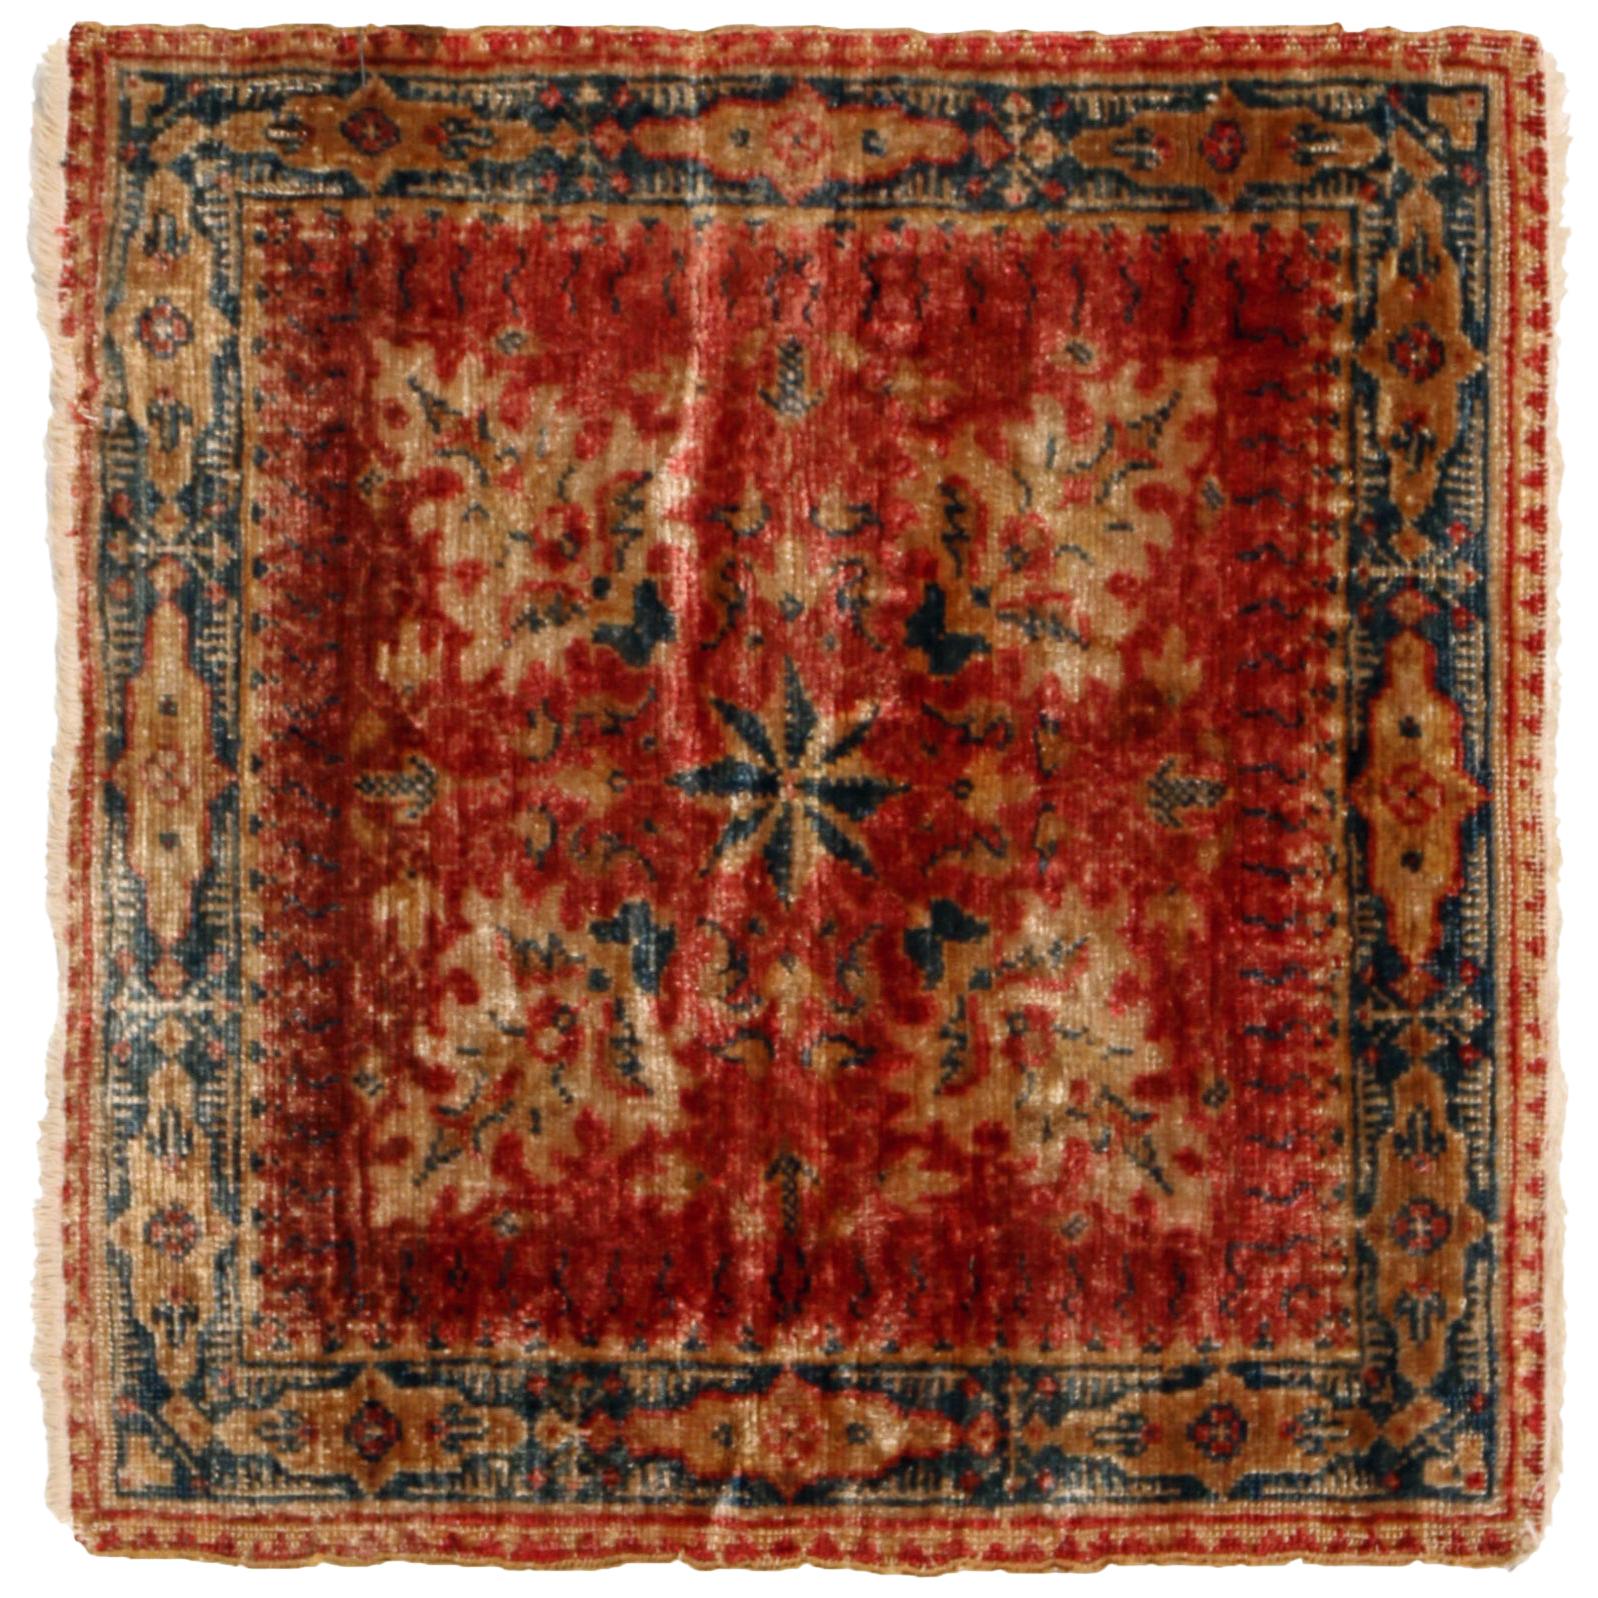 Antique Hereke Red Beige Silk Square Rug Motifs Floral Pattern by Rug & Kilim For Sale